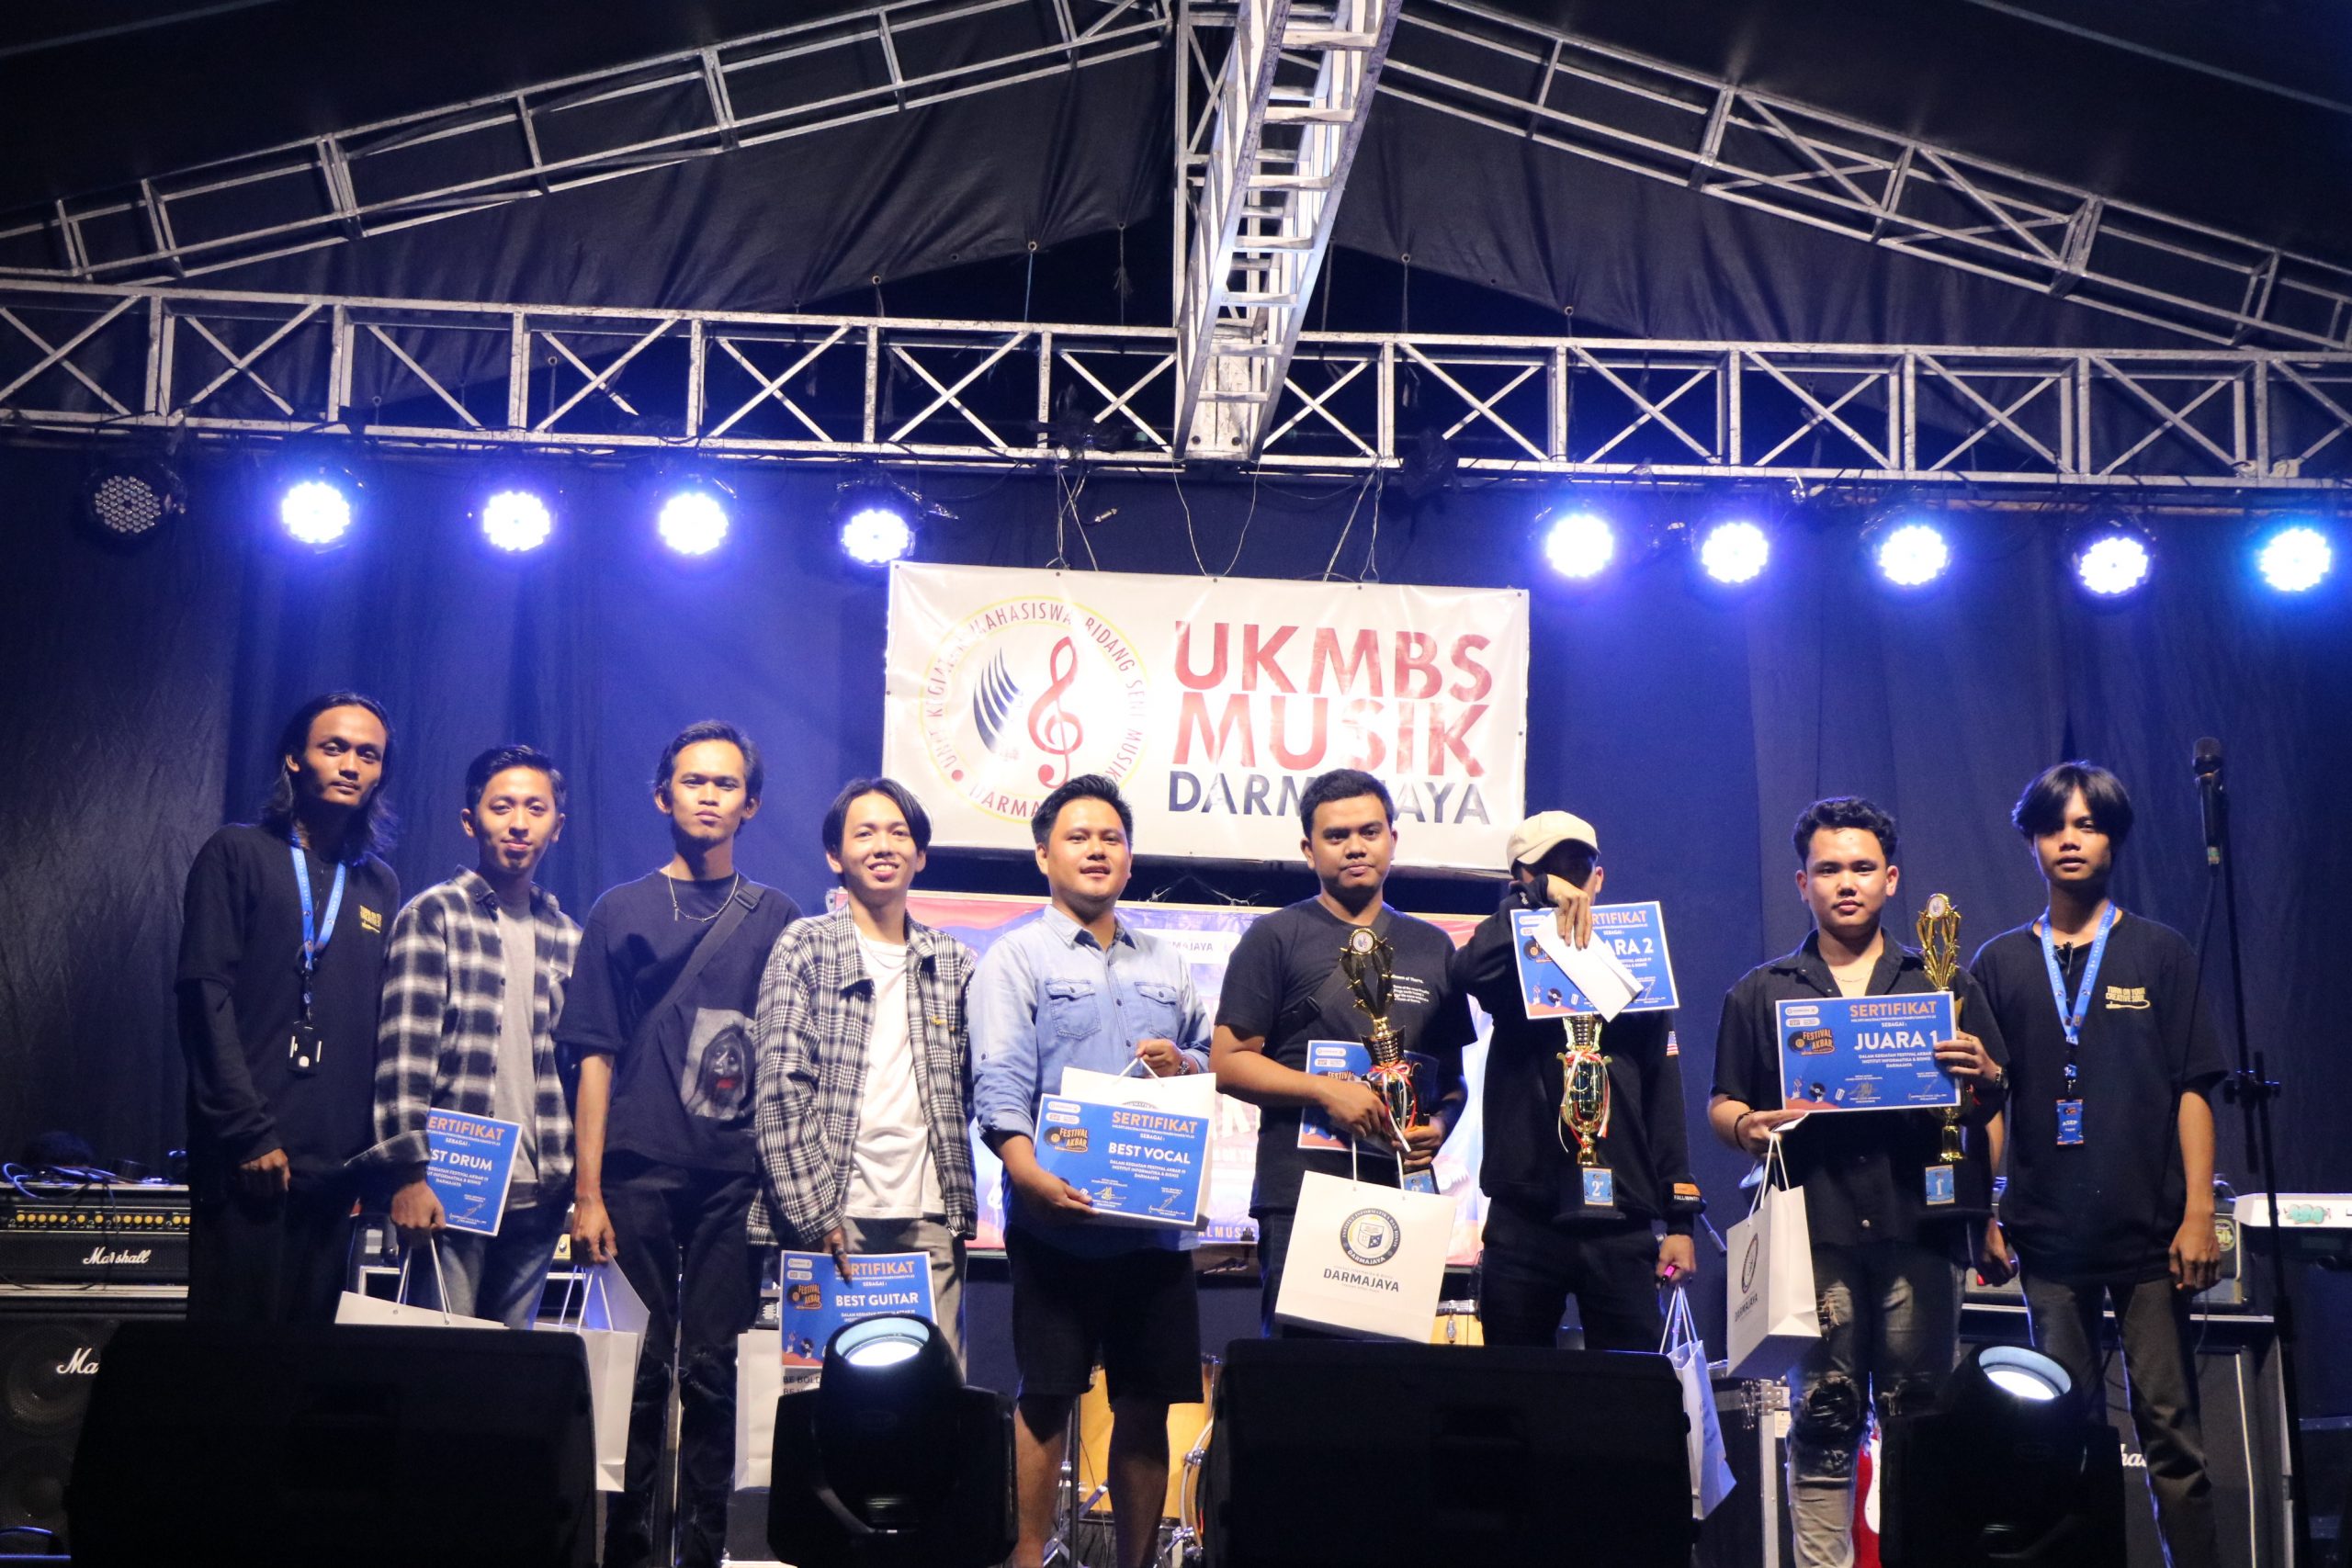 UKMBS Musik Gelar Festival Akbar 19, 14 Band Lokal Tampil di IIB Darmajaya